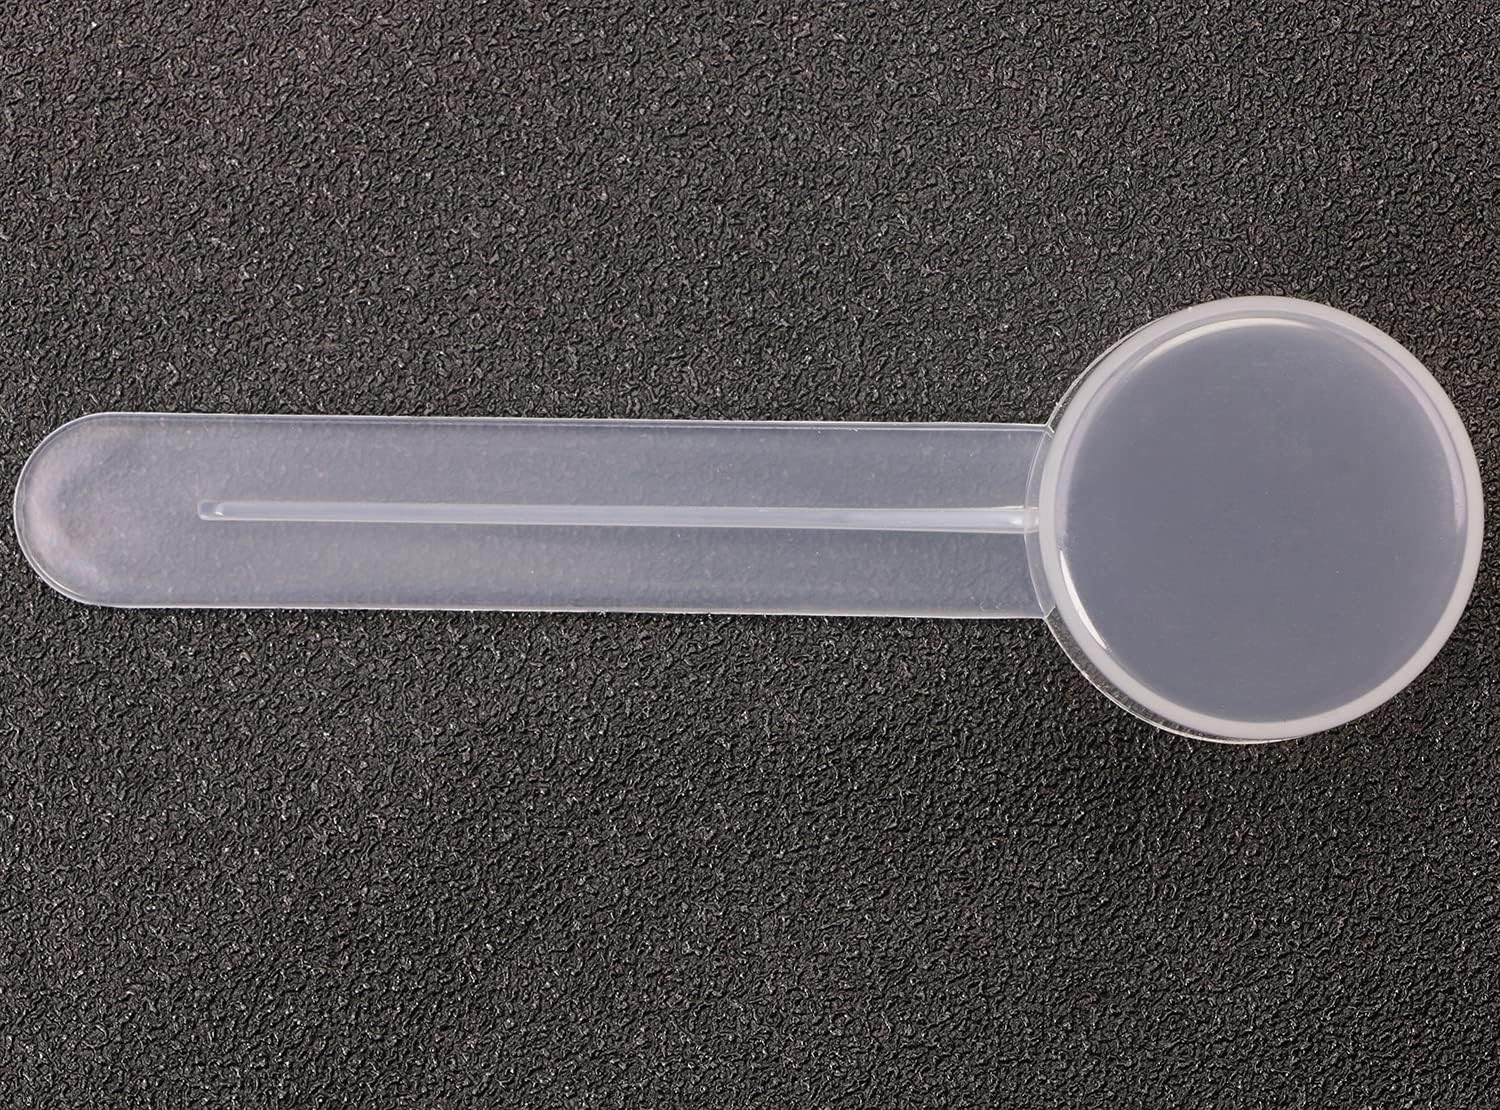 10ml Clear Round Measuring Plastic Scoop